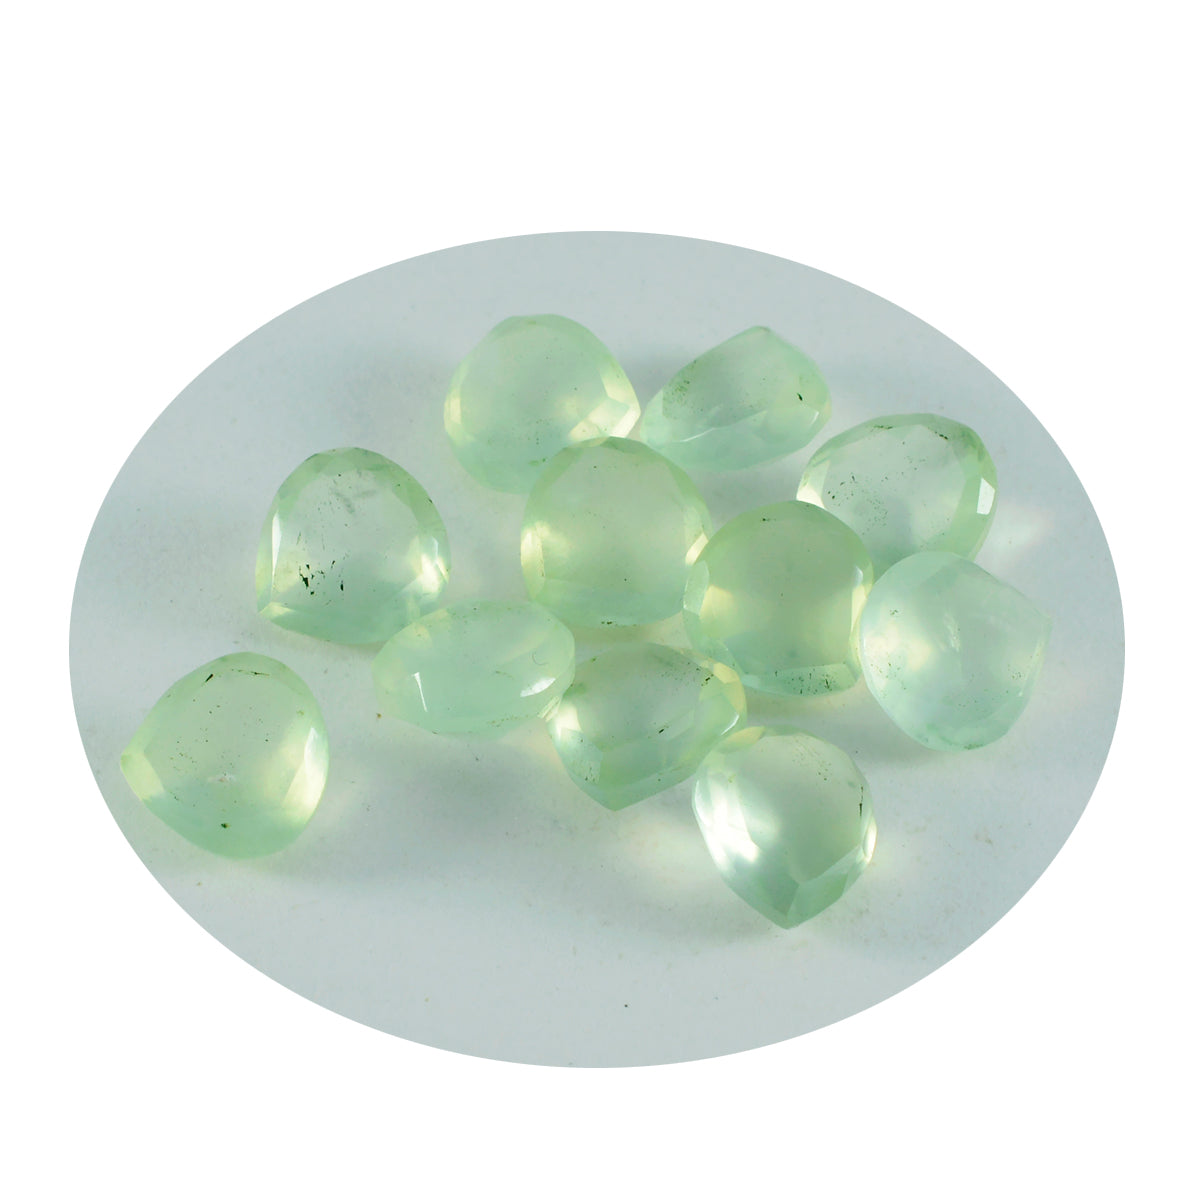 Riyogems 1PC Green Prehnite Faceted 7x7 mm Heart Shape beauty Quality Loose Gemstone